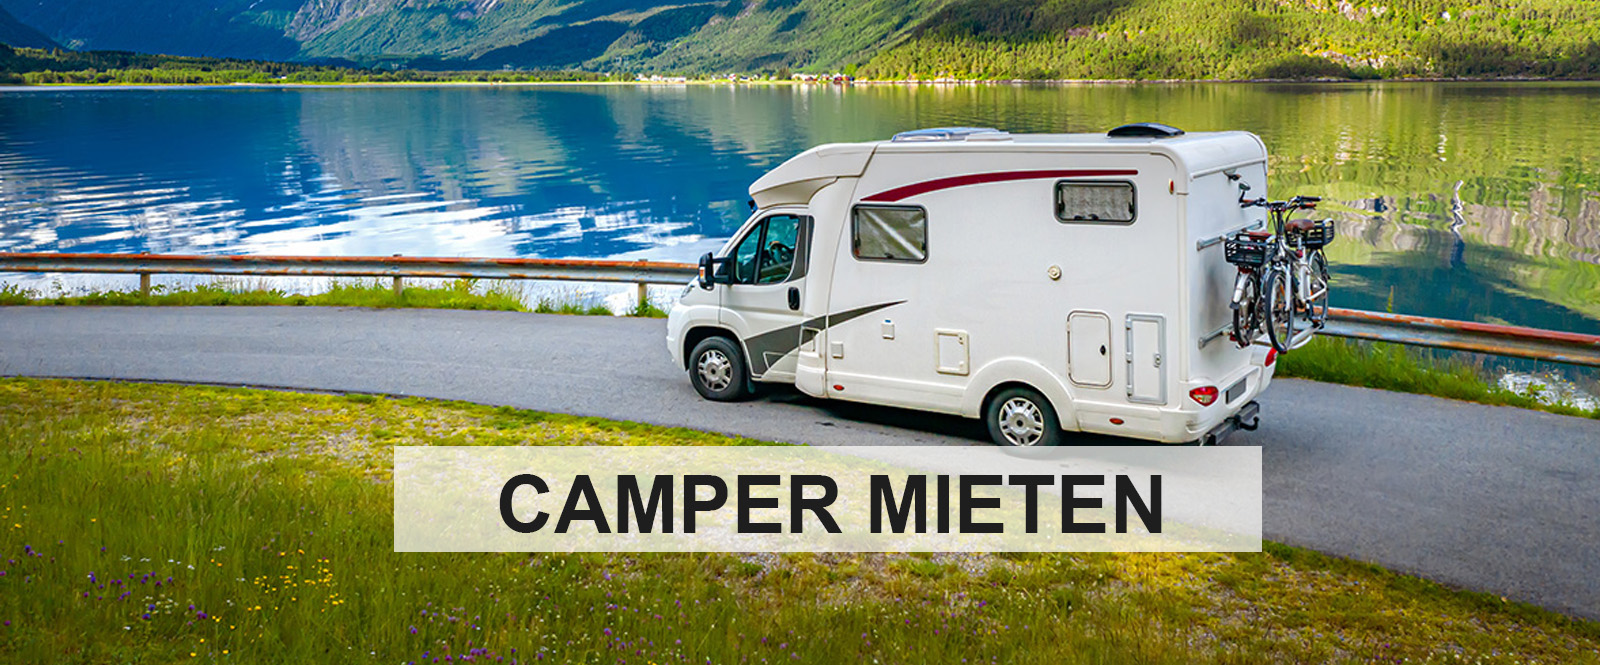 Camper mieten - Grimmer's Reisewelt